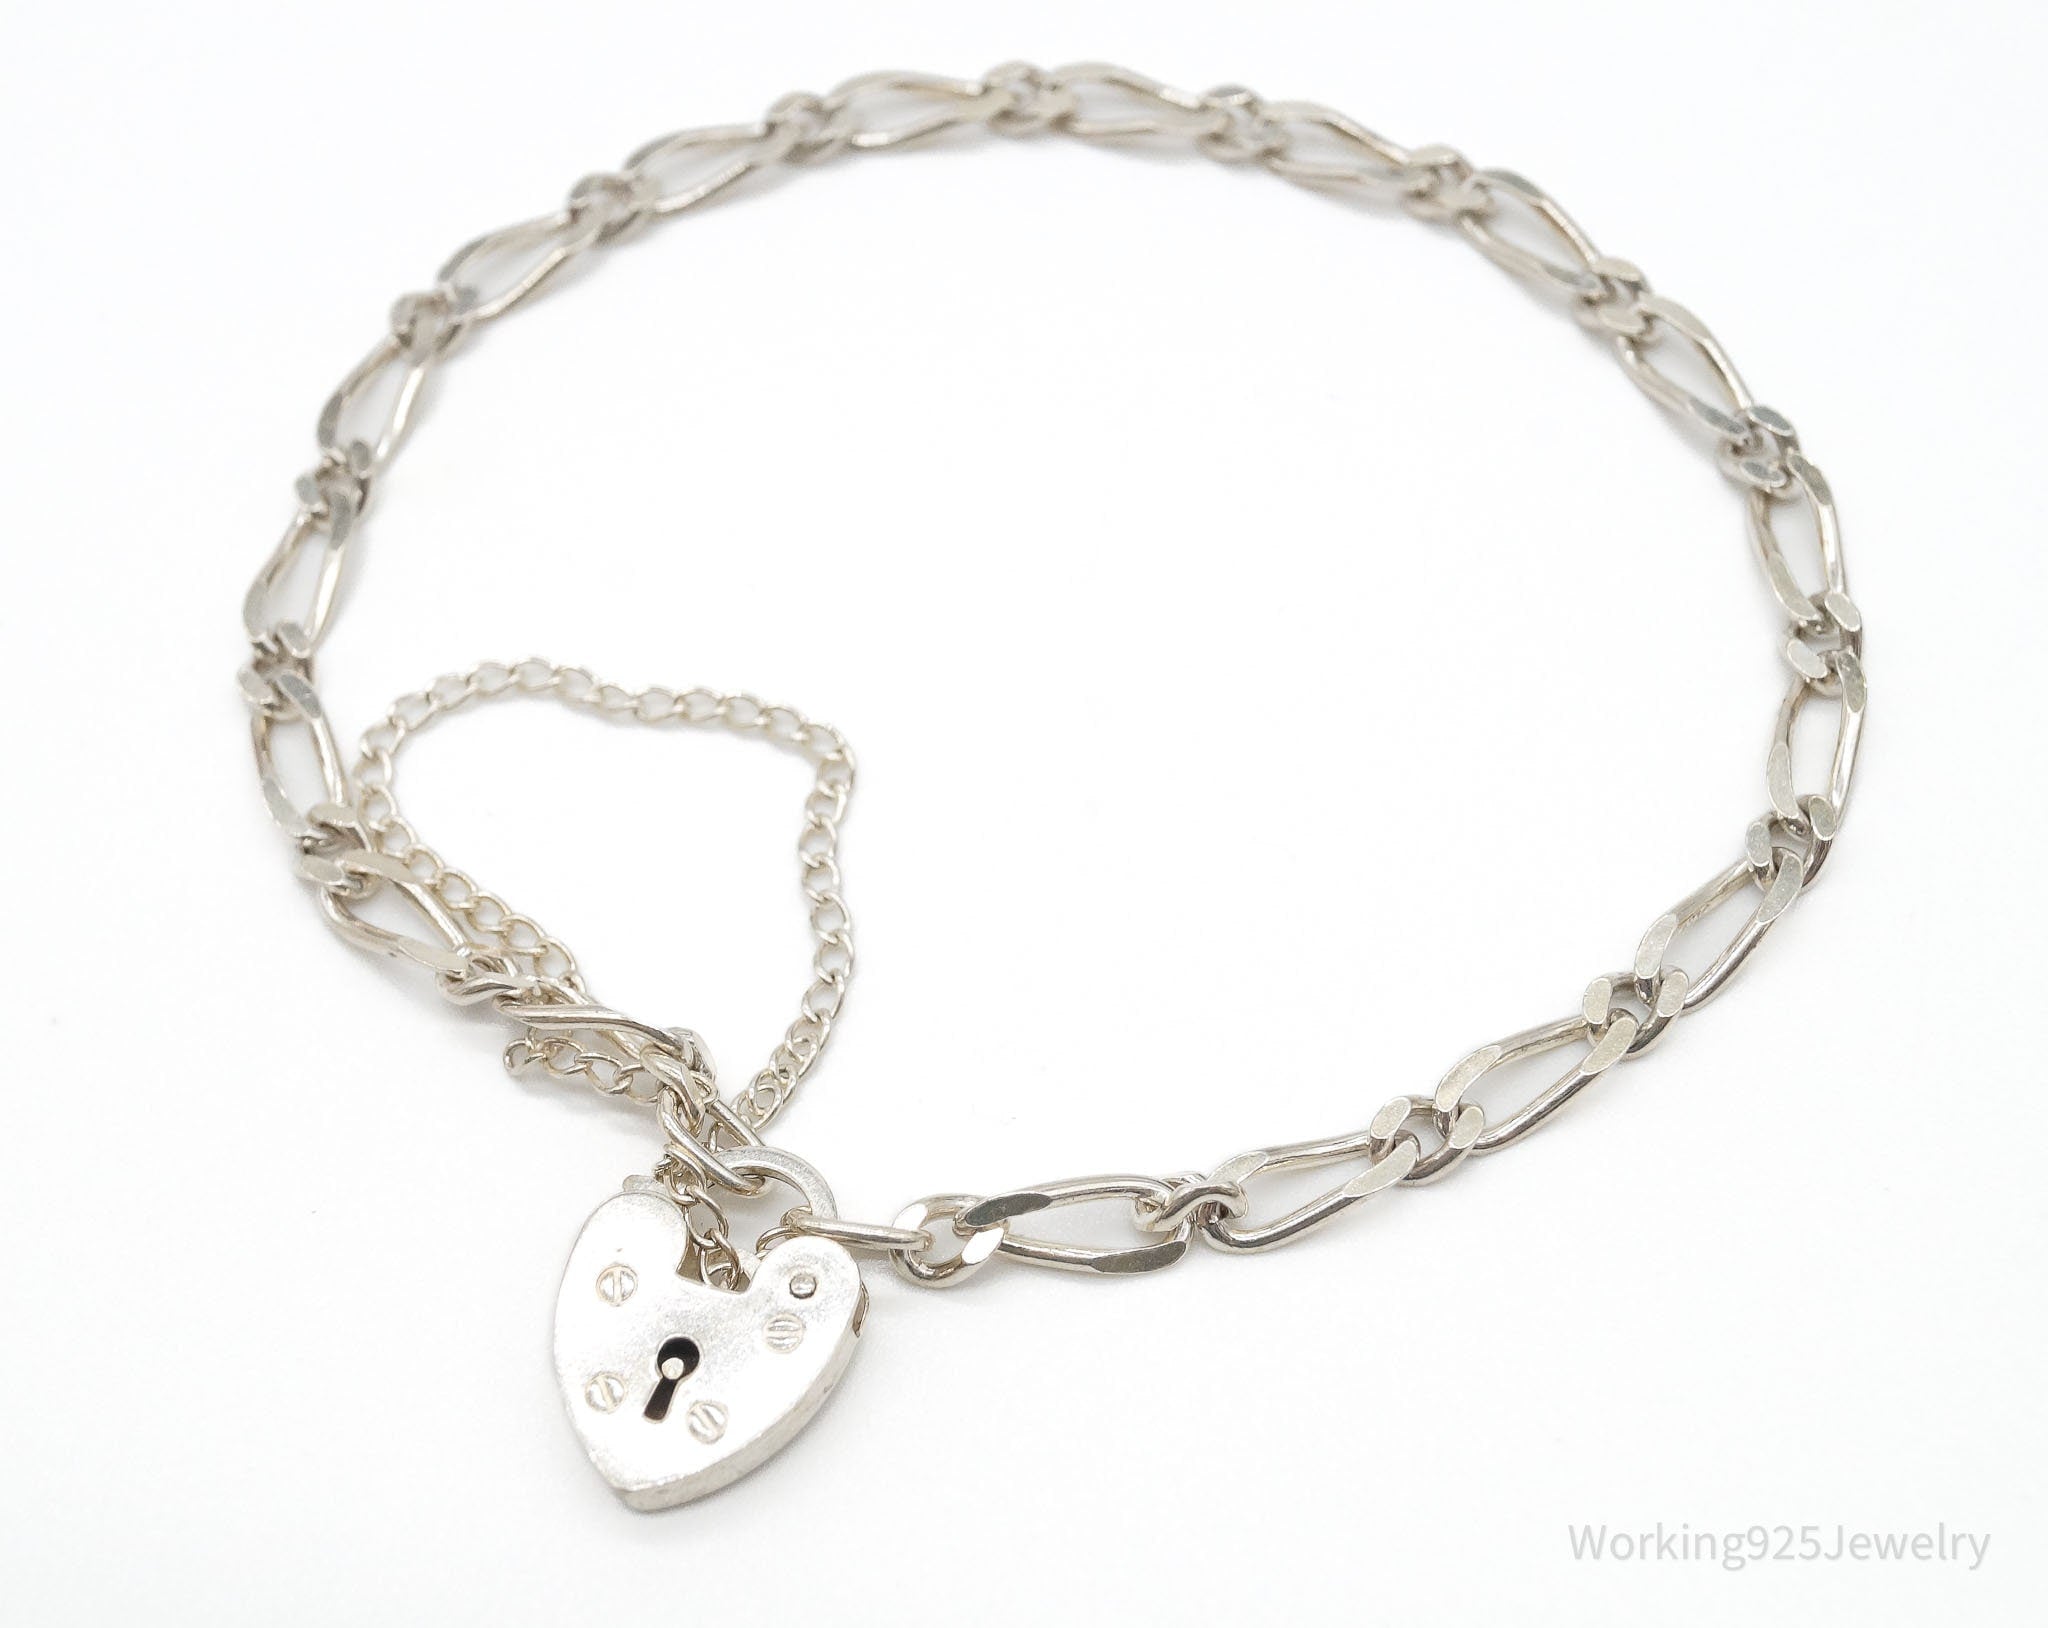 Antique Heart Pad Lock Charm Closure Sterling Silver Pressure Release Bracelet